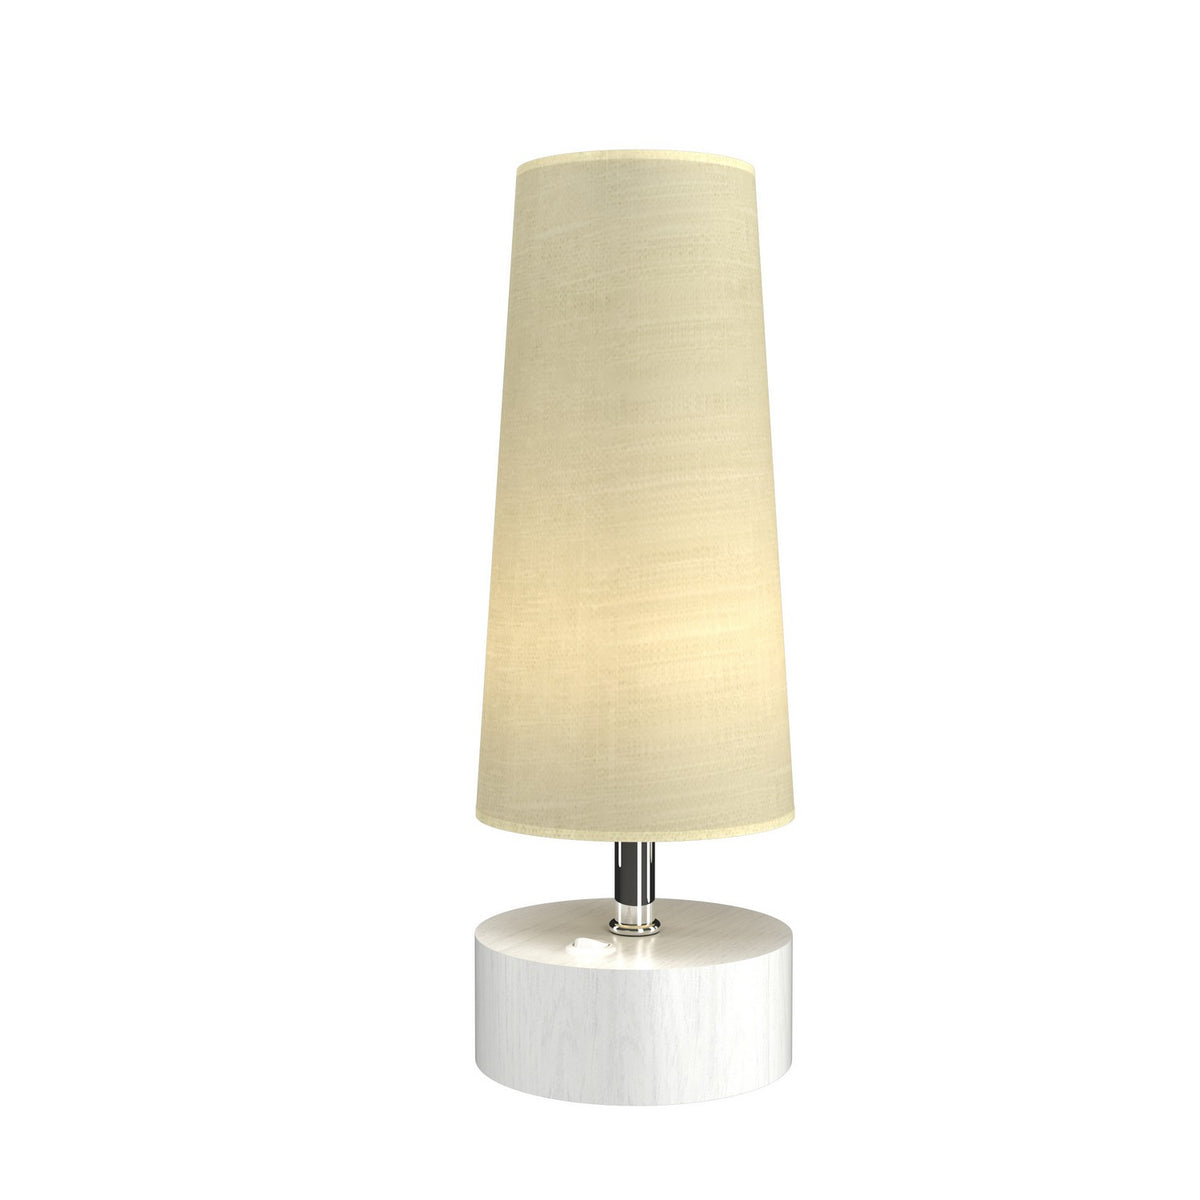 Accord Lighting - 7101.47 - LED Table Lamp - Clean - Organic White